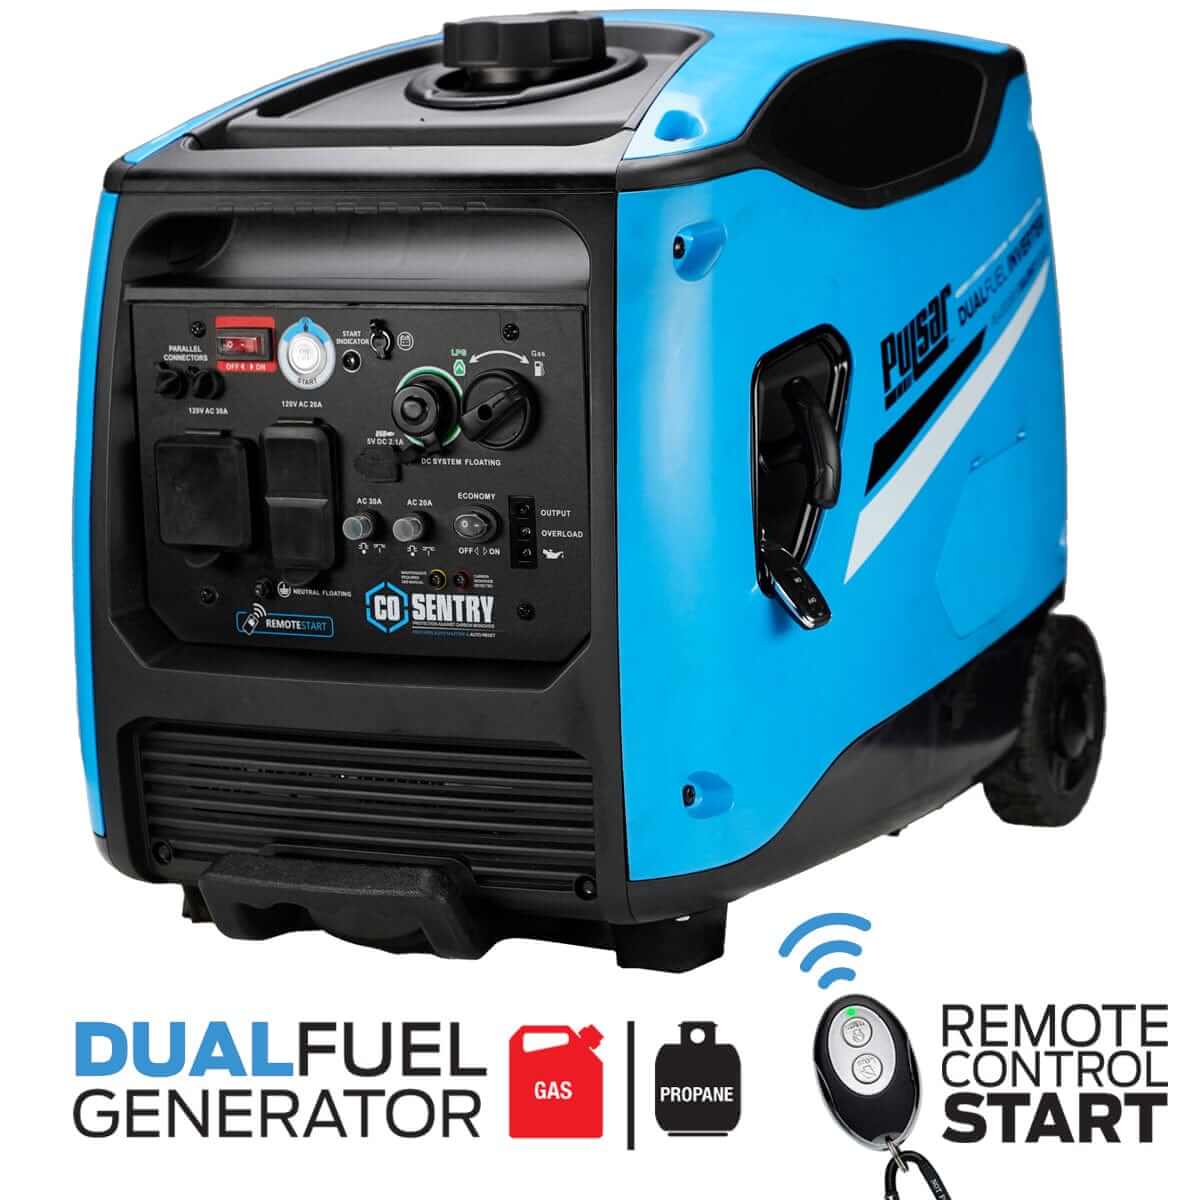 Pulsar Inverter Generator Pulsar PG4500BiSRCO 4,500-Watt Dual Fuel Inverter Generator with Remote Start and CO Alert - CARB Compliant